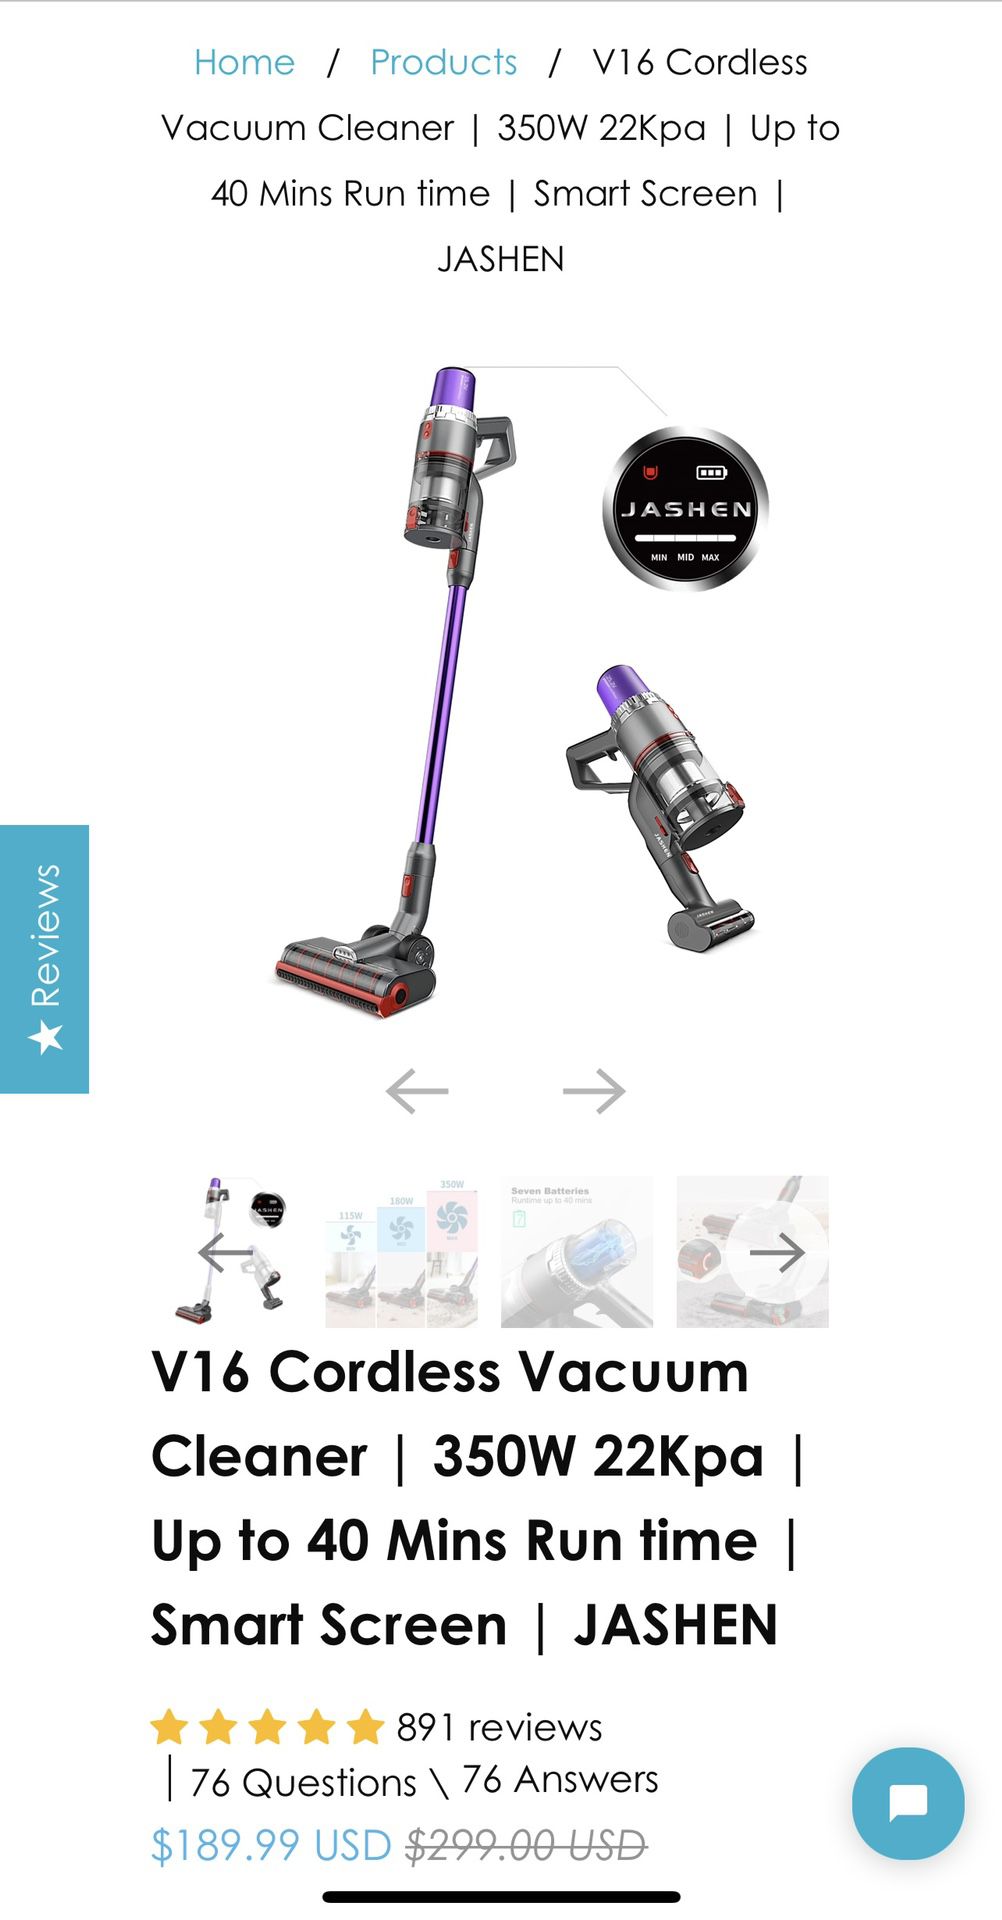 New Cordless Vacuum - Jashen V16